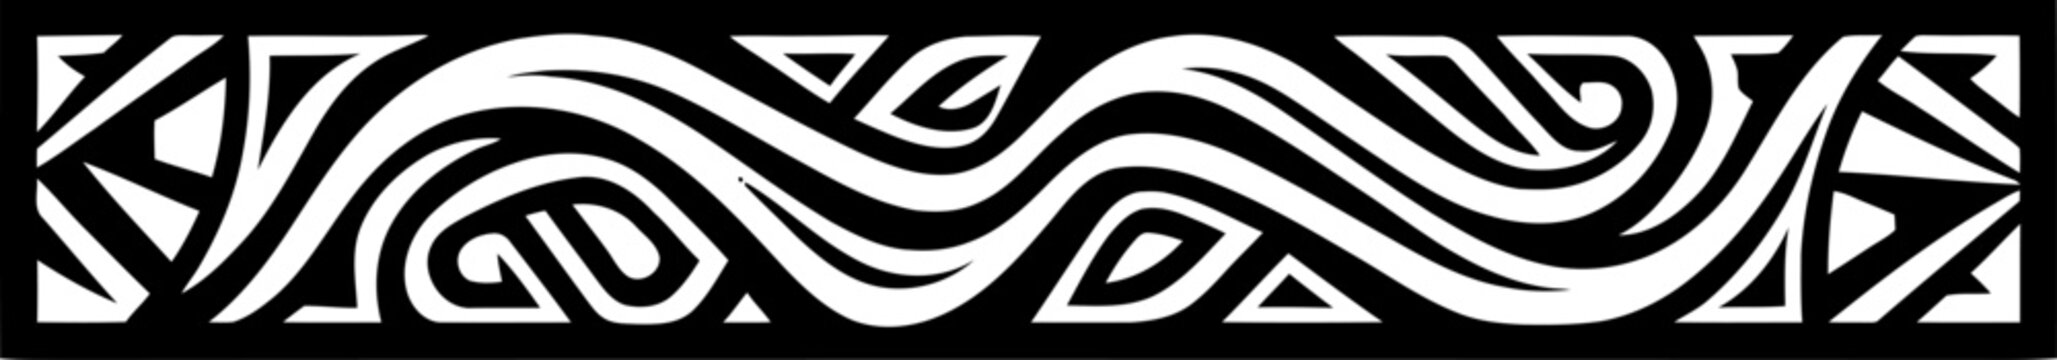 Maori stripe tattoo silhouette in black color. Vector template design for laser cutting wall art.